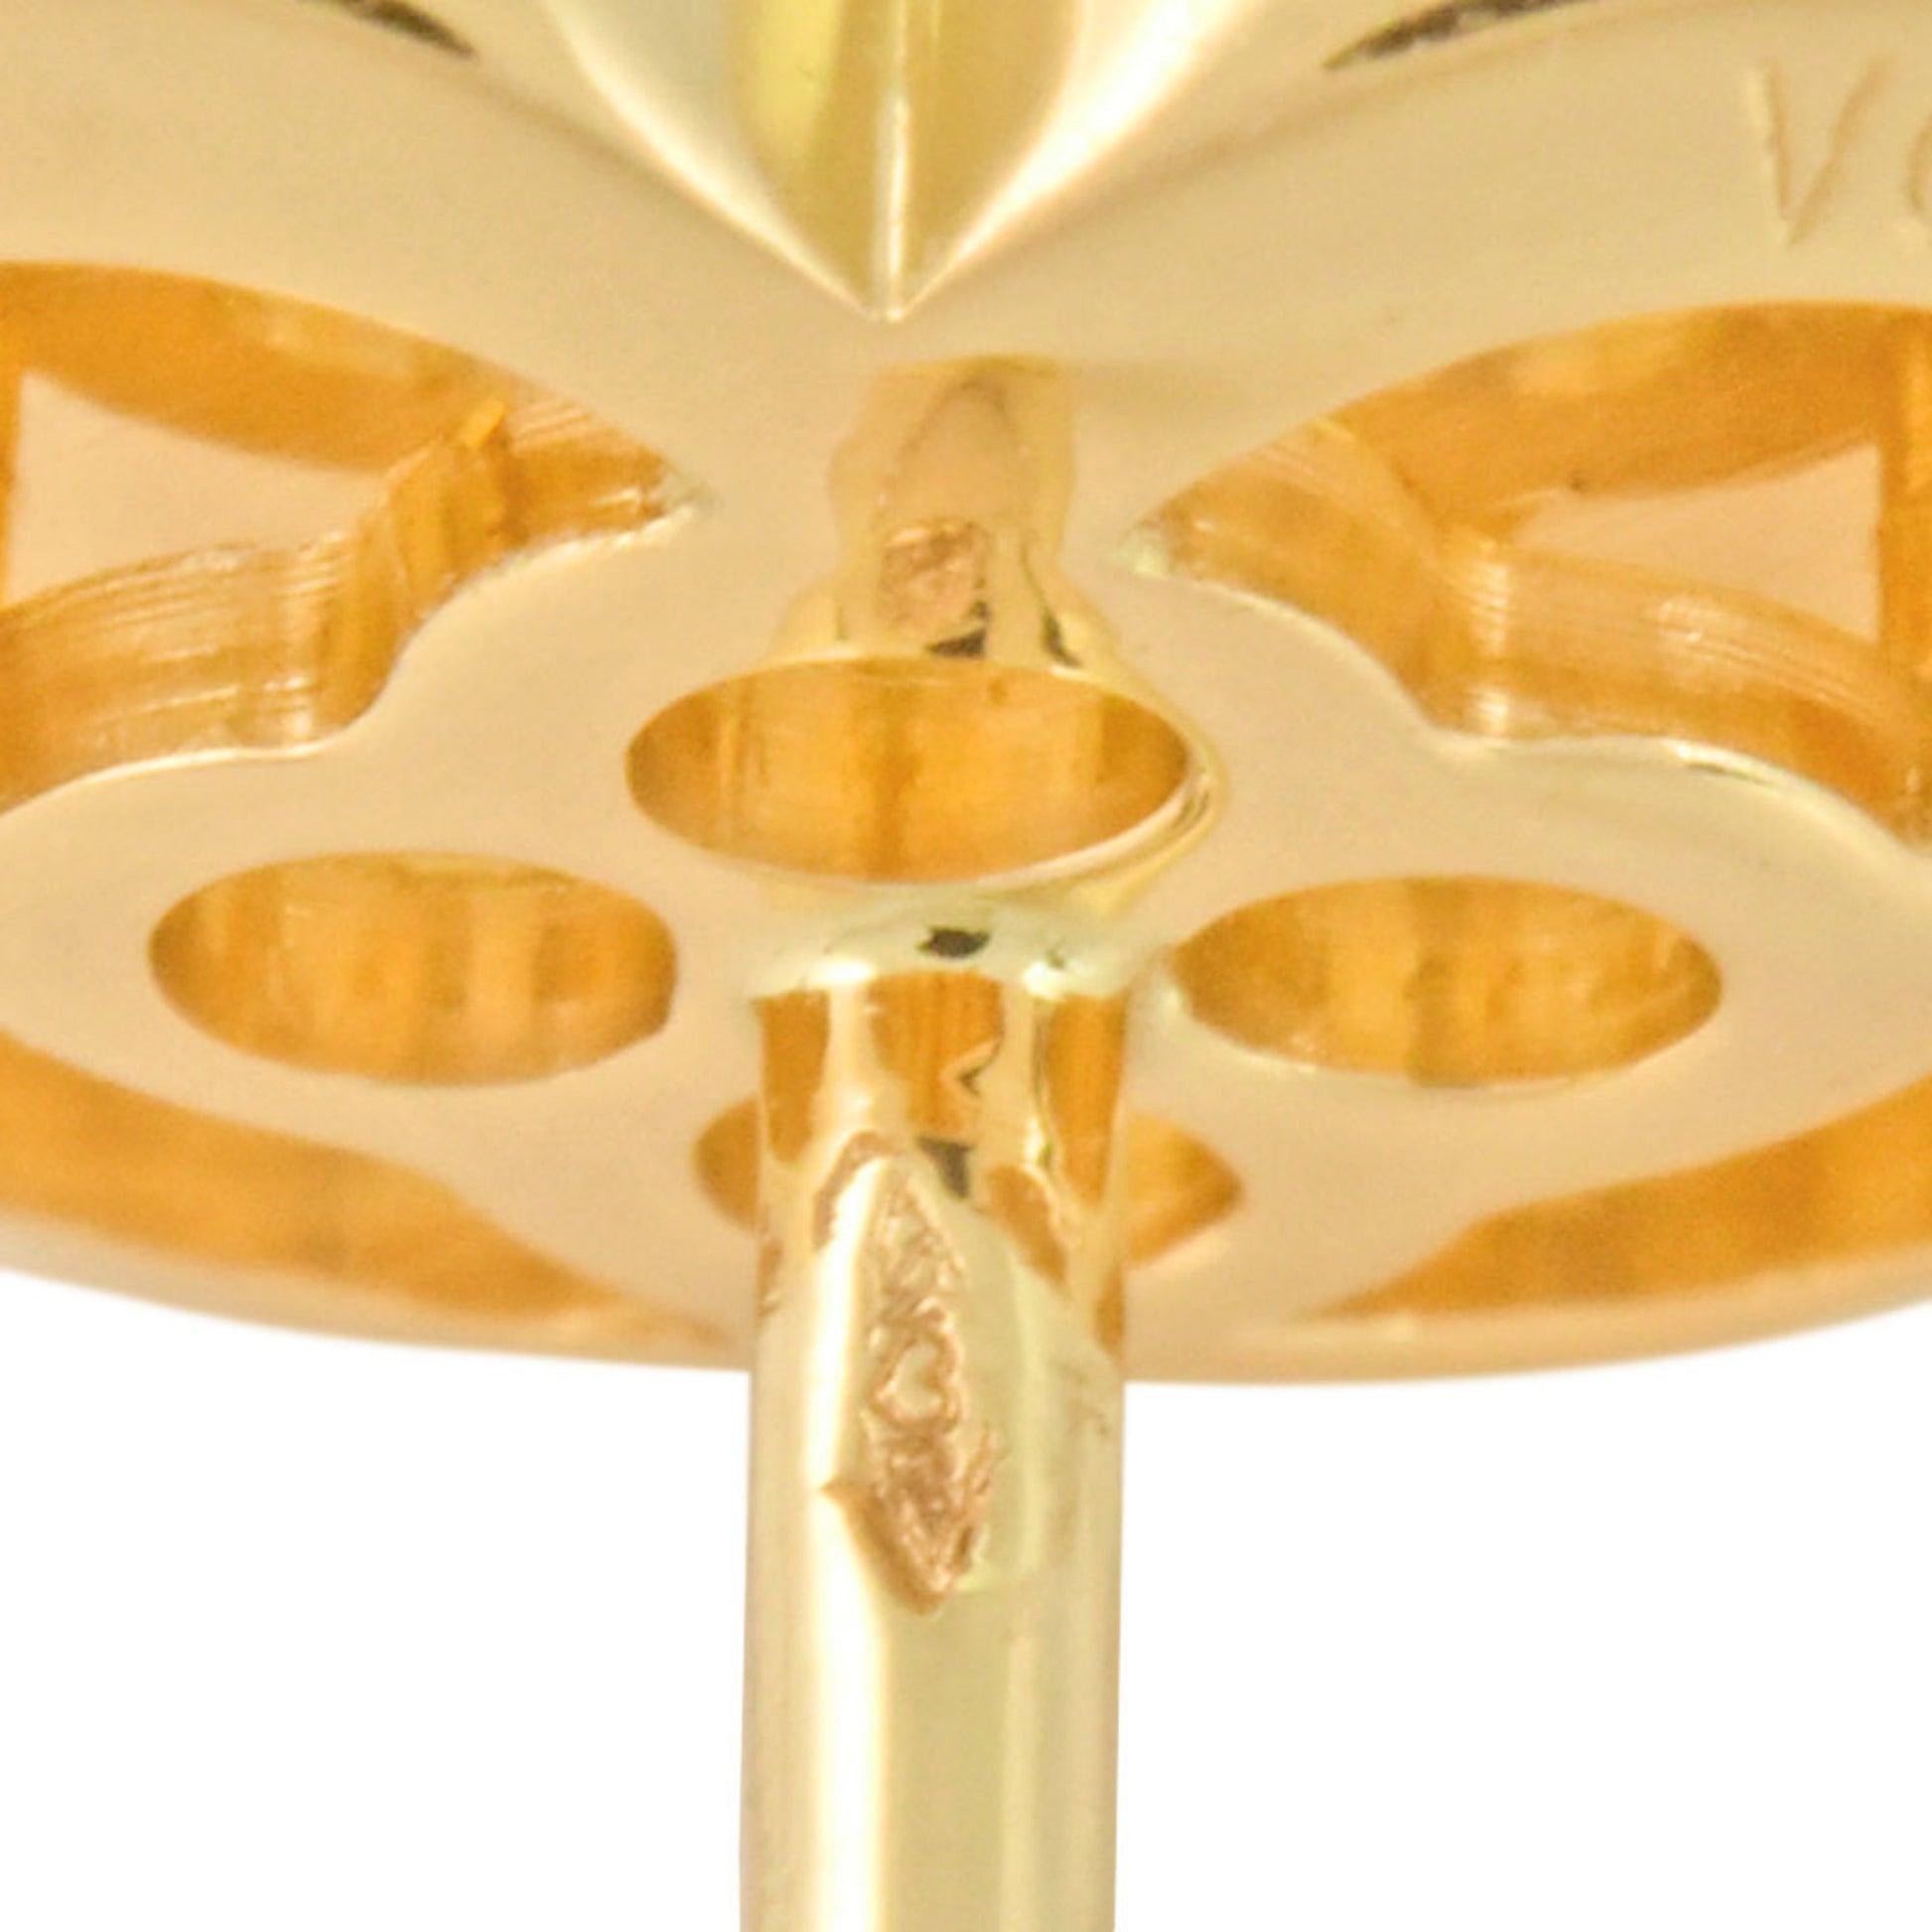 Van Cleef & Arpels Alhambra Earrings in 18K Yellow Gold

Additional Information:
Brand: Van Cleef & Arpels
Gender: Women
Line: Alhambra
Earring type: Stud earrings
Material: Yellow gold (18K)
Condition: Good
Condition details: The item has been used